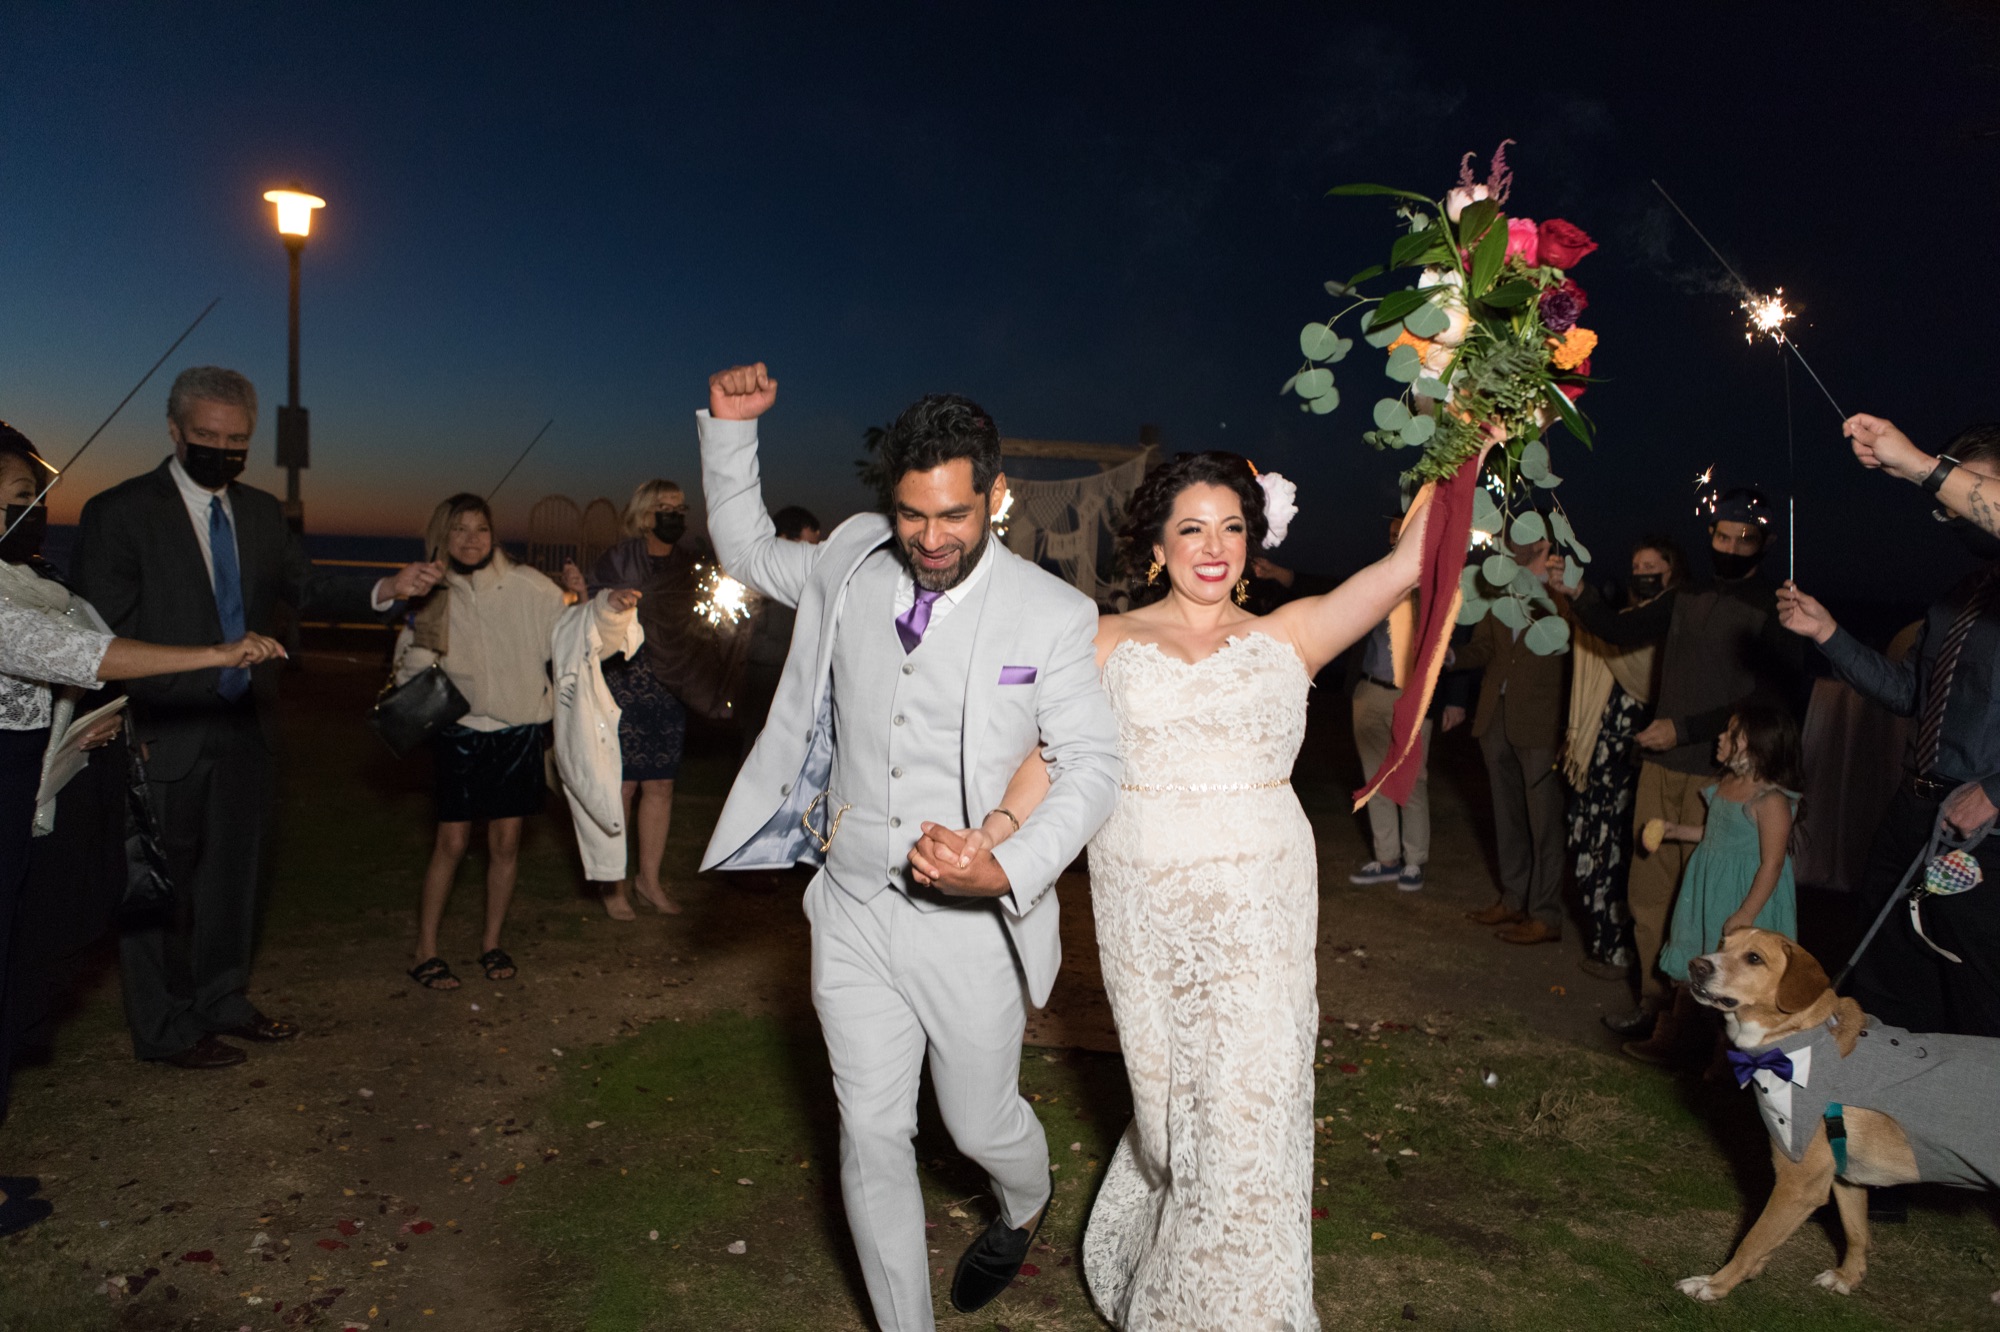 wedding sparkler exit at Scripps Park in La Jolla